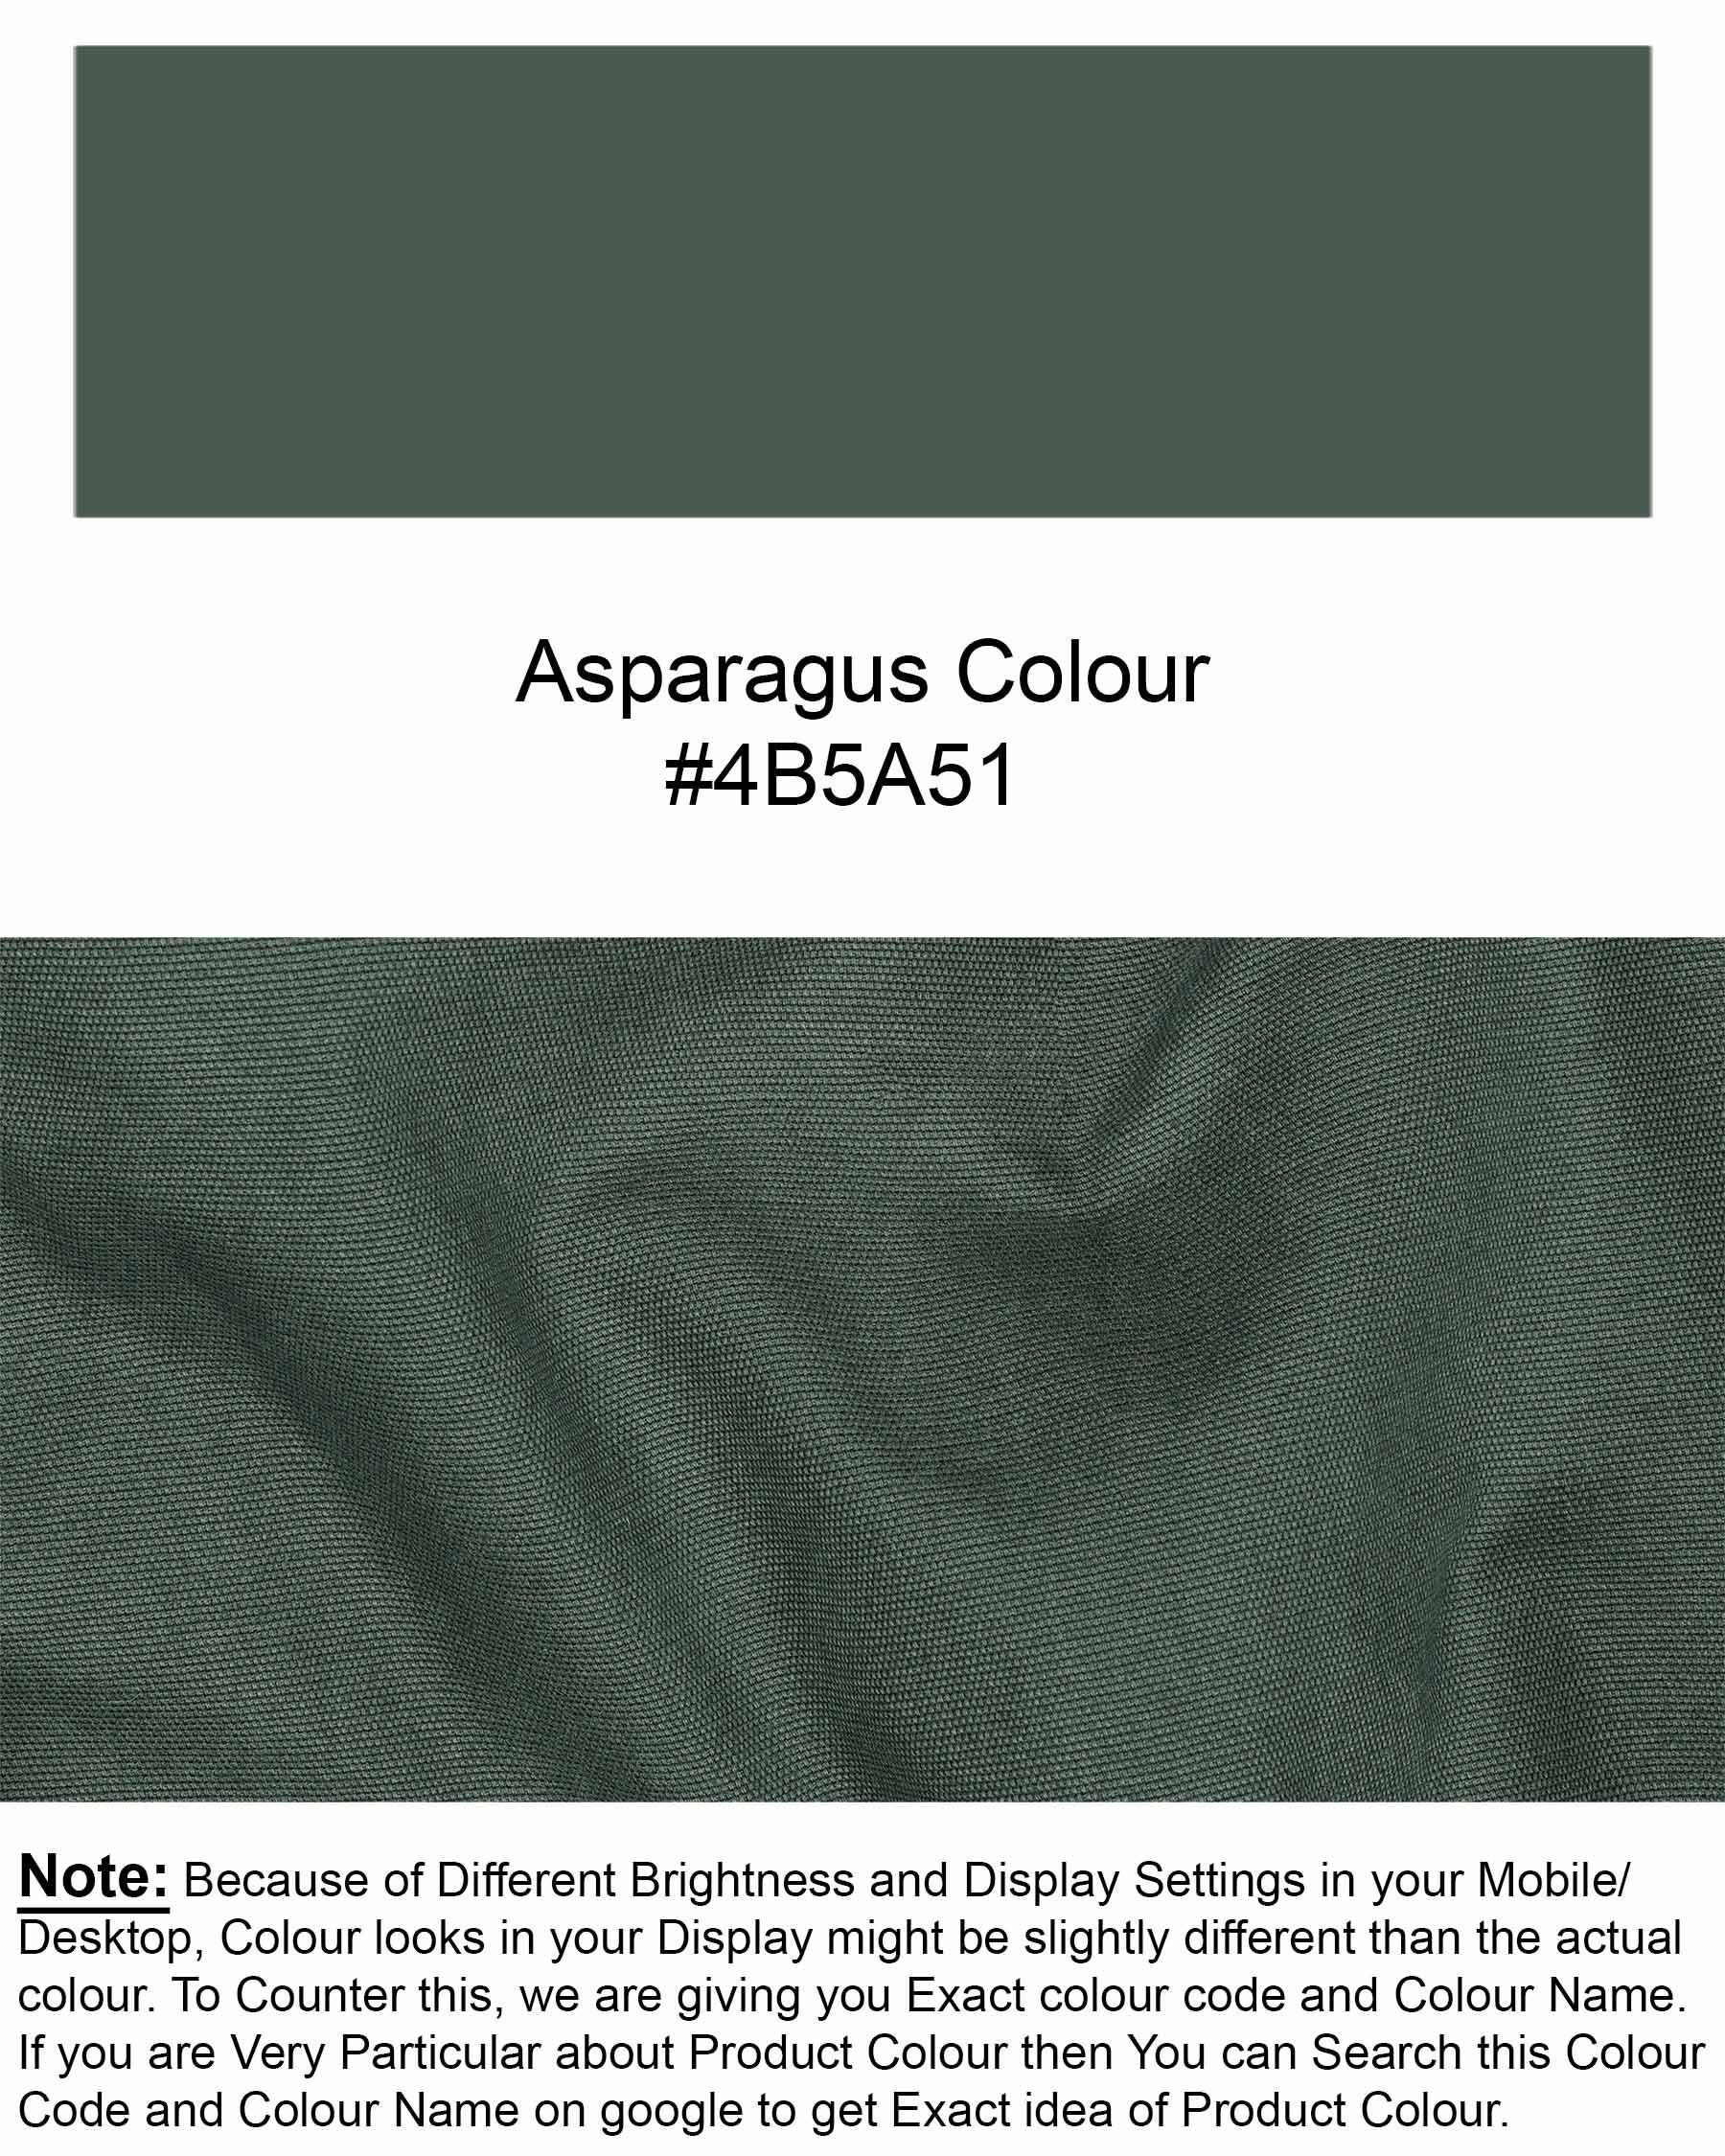 Asparagus Green Cross Buttoned Premium Cotton Bandhgala Blazer BL1901-CBG-36,BL1901-CBG-38,BL1901-CBG-40,BL1901-CBG-42,BL1901-CBG-44,BL1901-CBG-46,BL1901-CBG-48,BL1901-CBG-50,BL1901-CBG-52,BL1901-CBG-54,BL1901-CBG-56,BL1901-CBG-58,BL1901-CBG-60